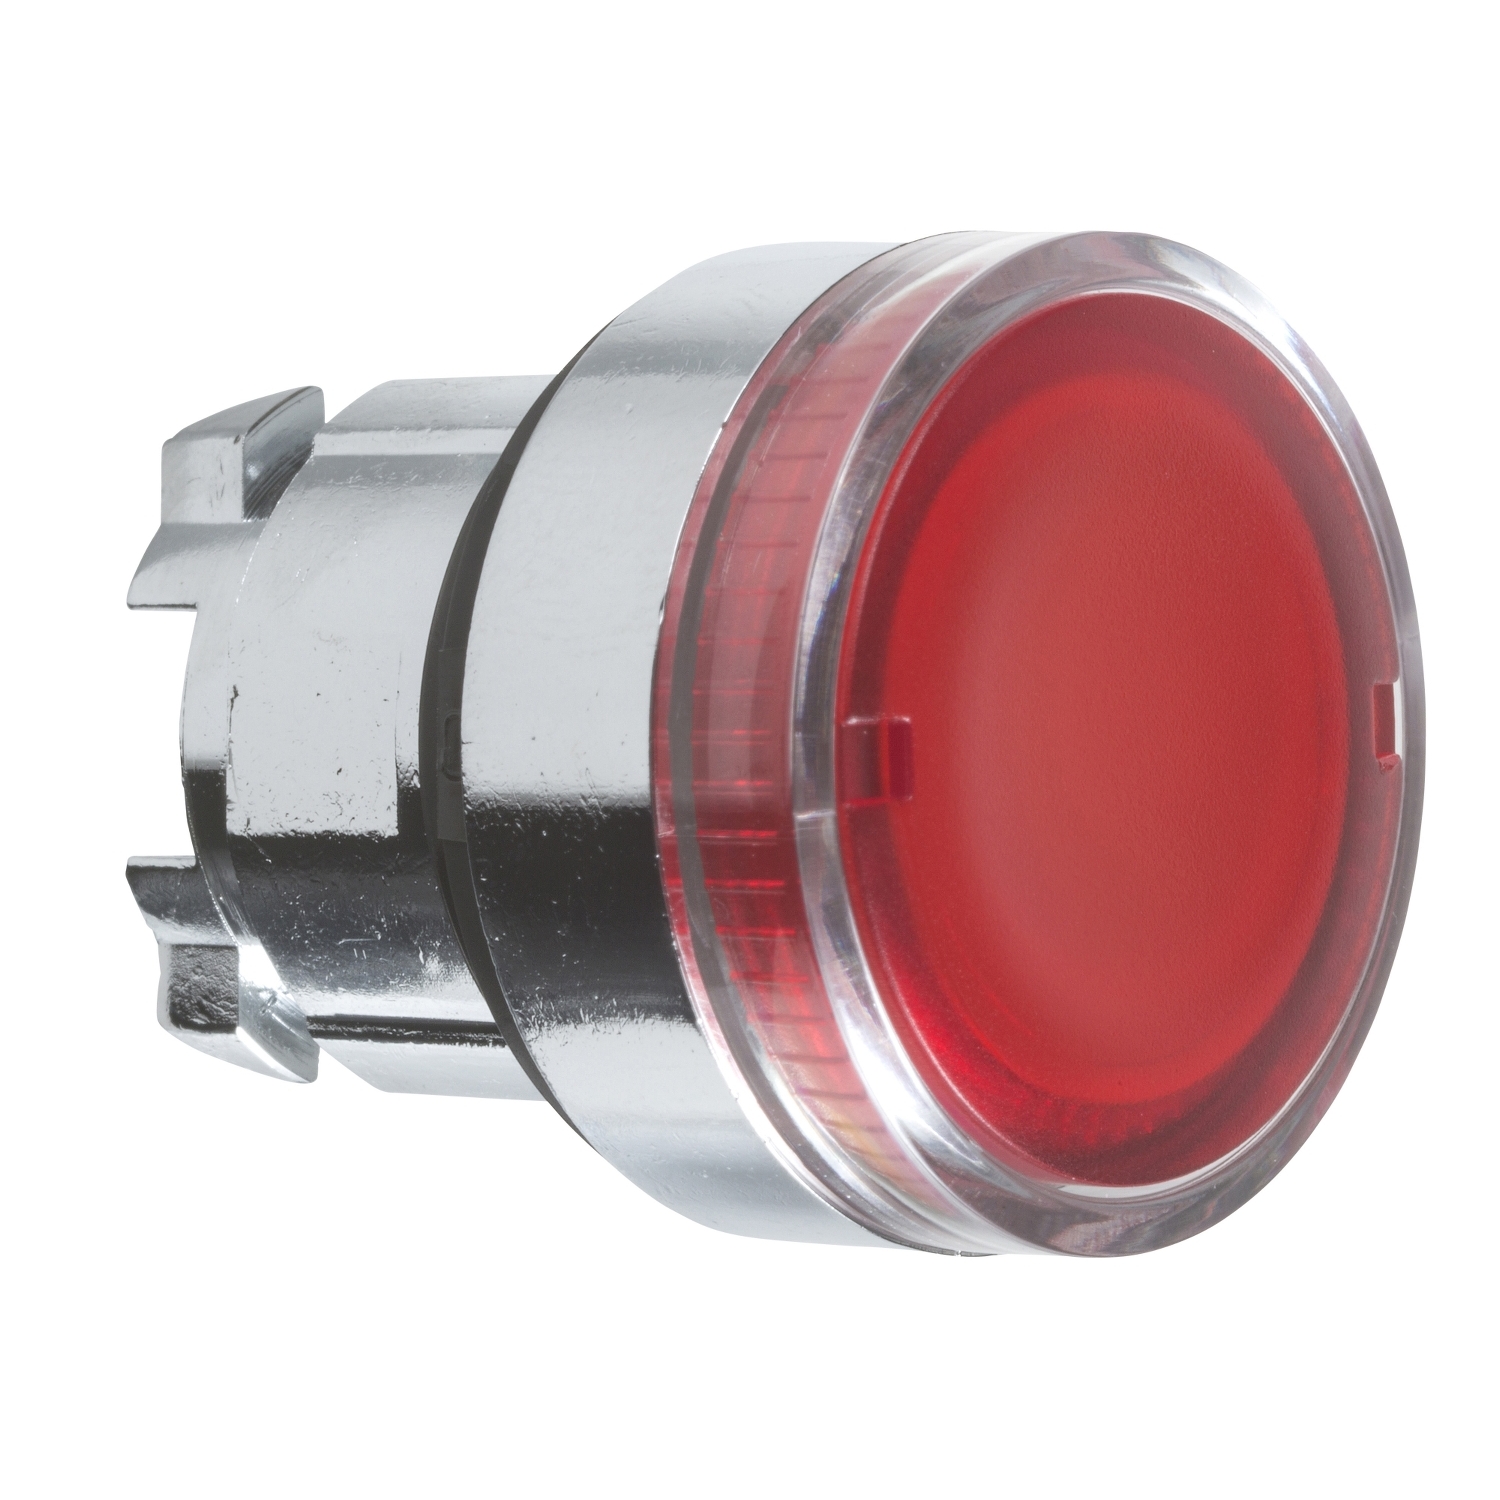 ZB4BW34 Cabeza pulsador luminoso rojo ø 22 para lámpara BA9s